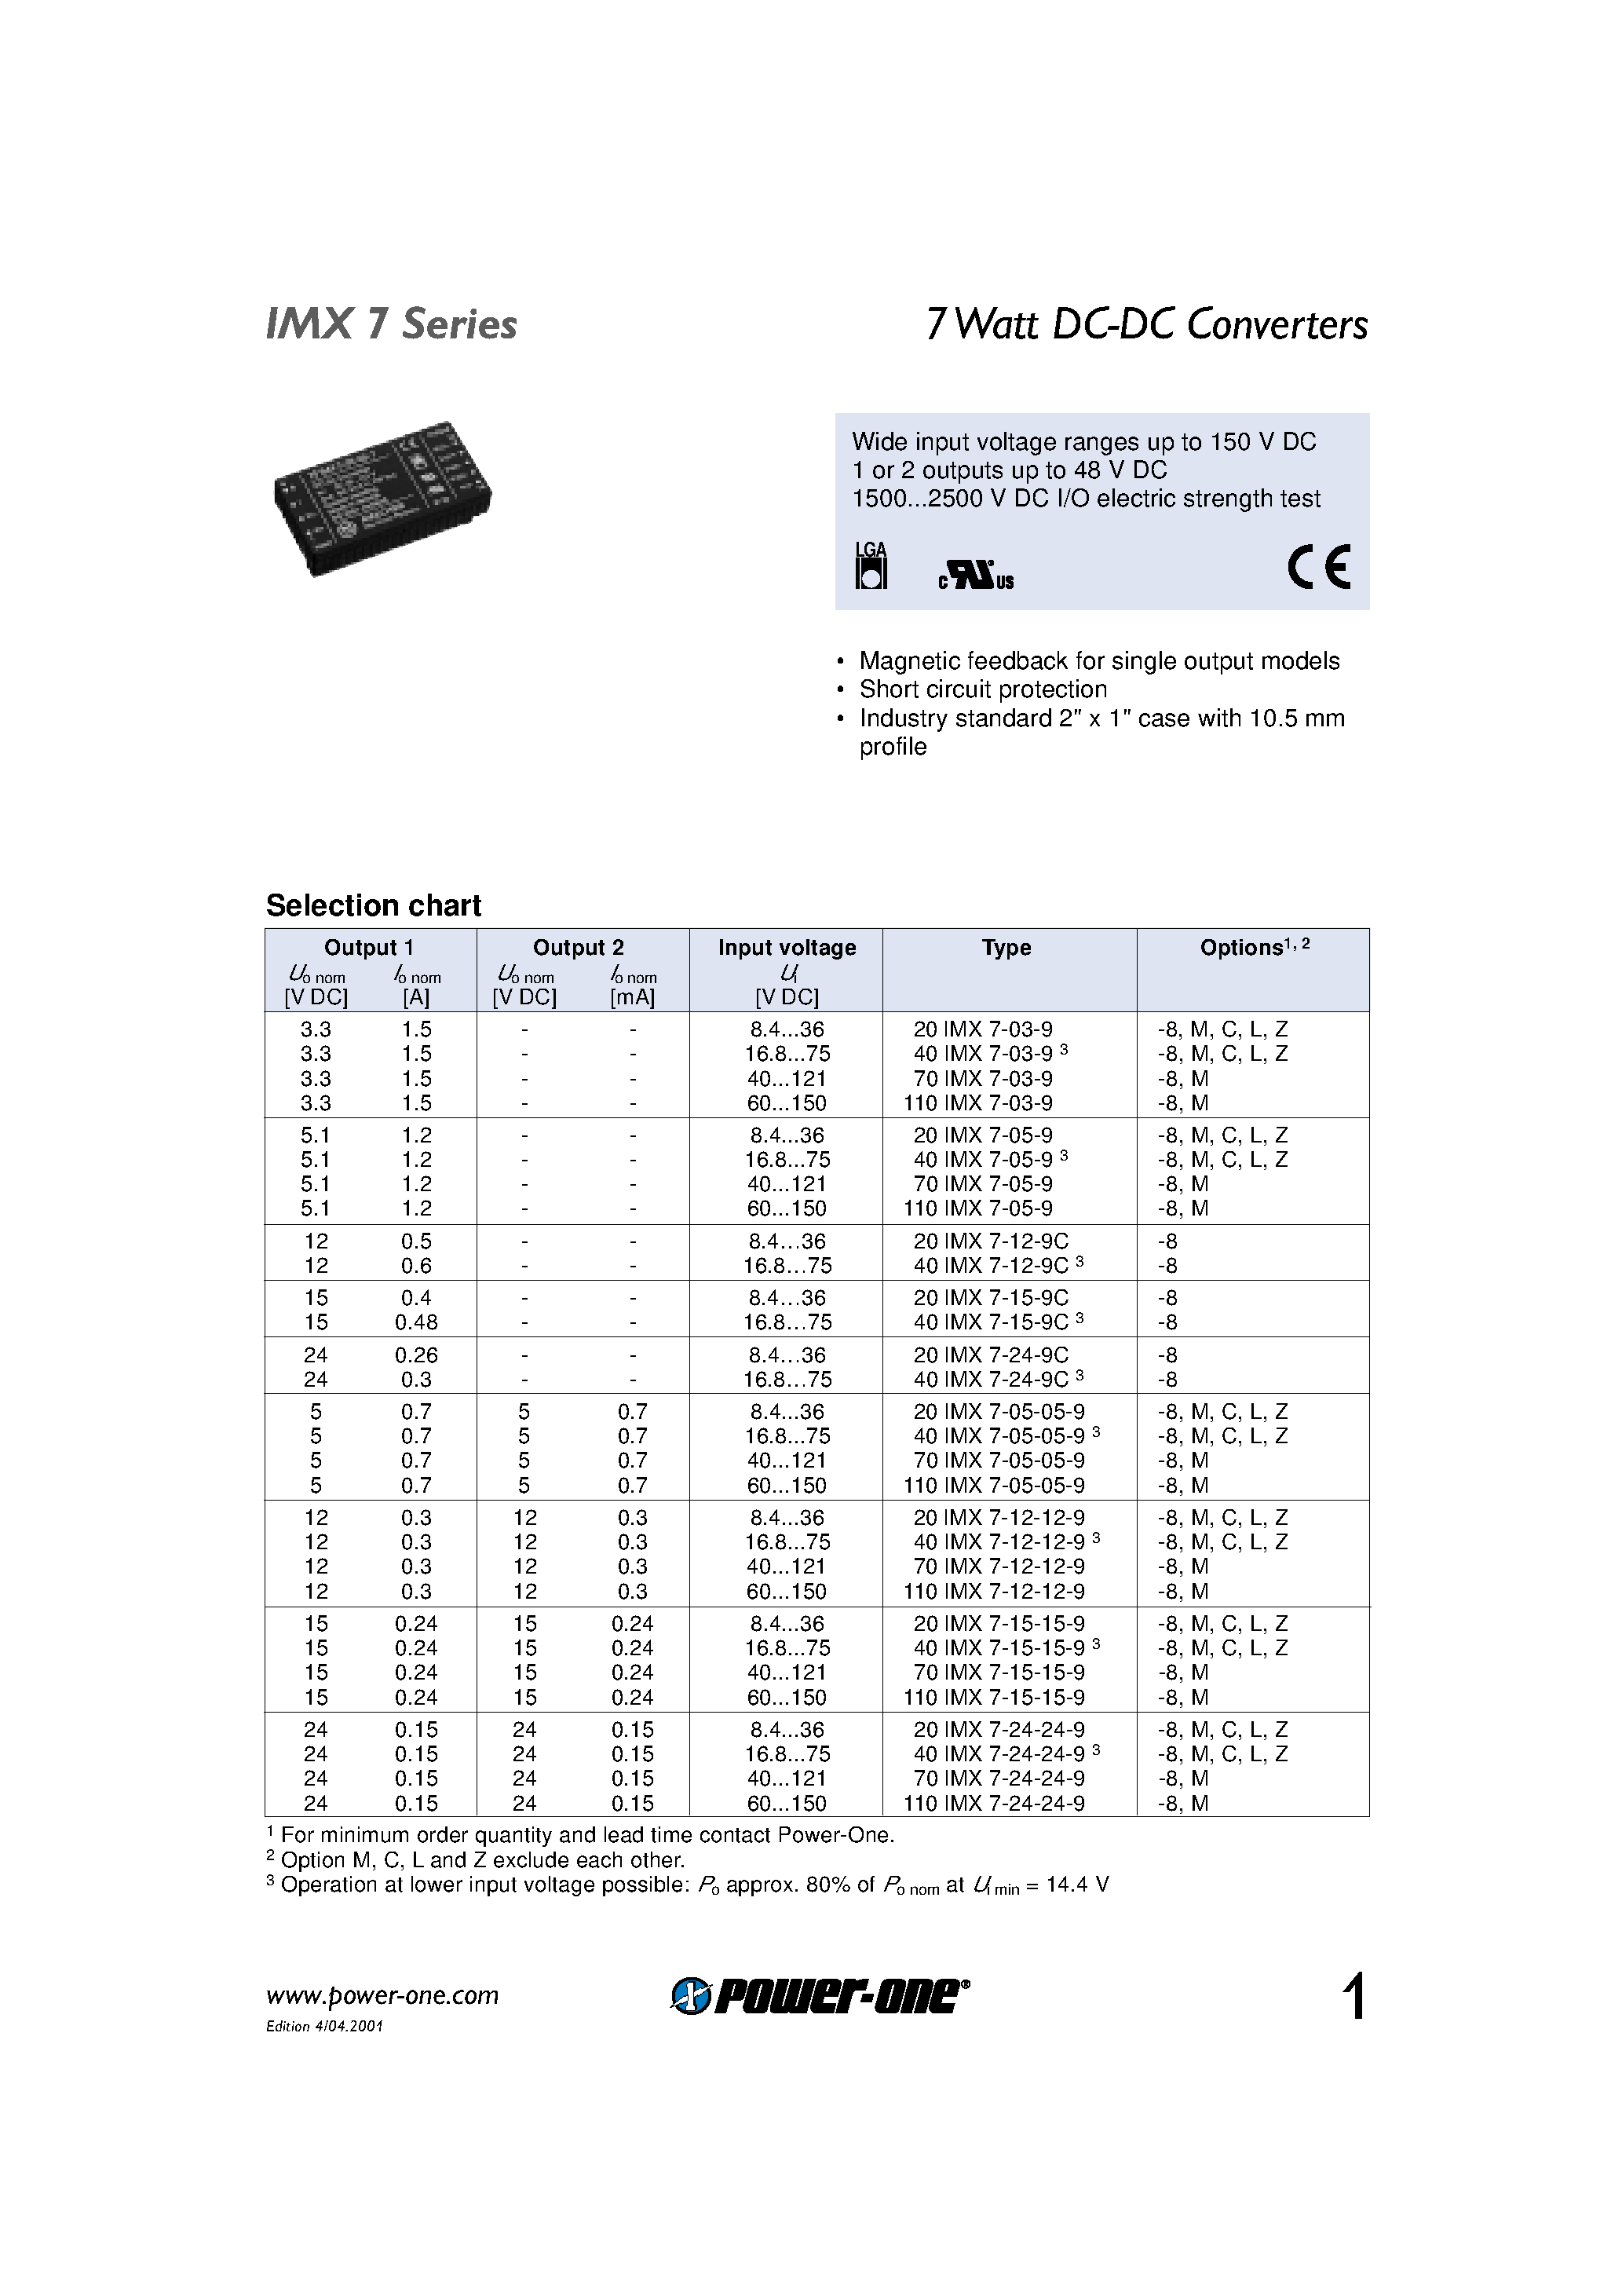 Datasheet 70IMX7-05-9 - 7 Watt DC-DC Converters page 1